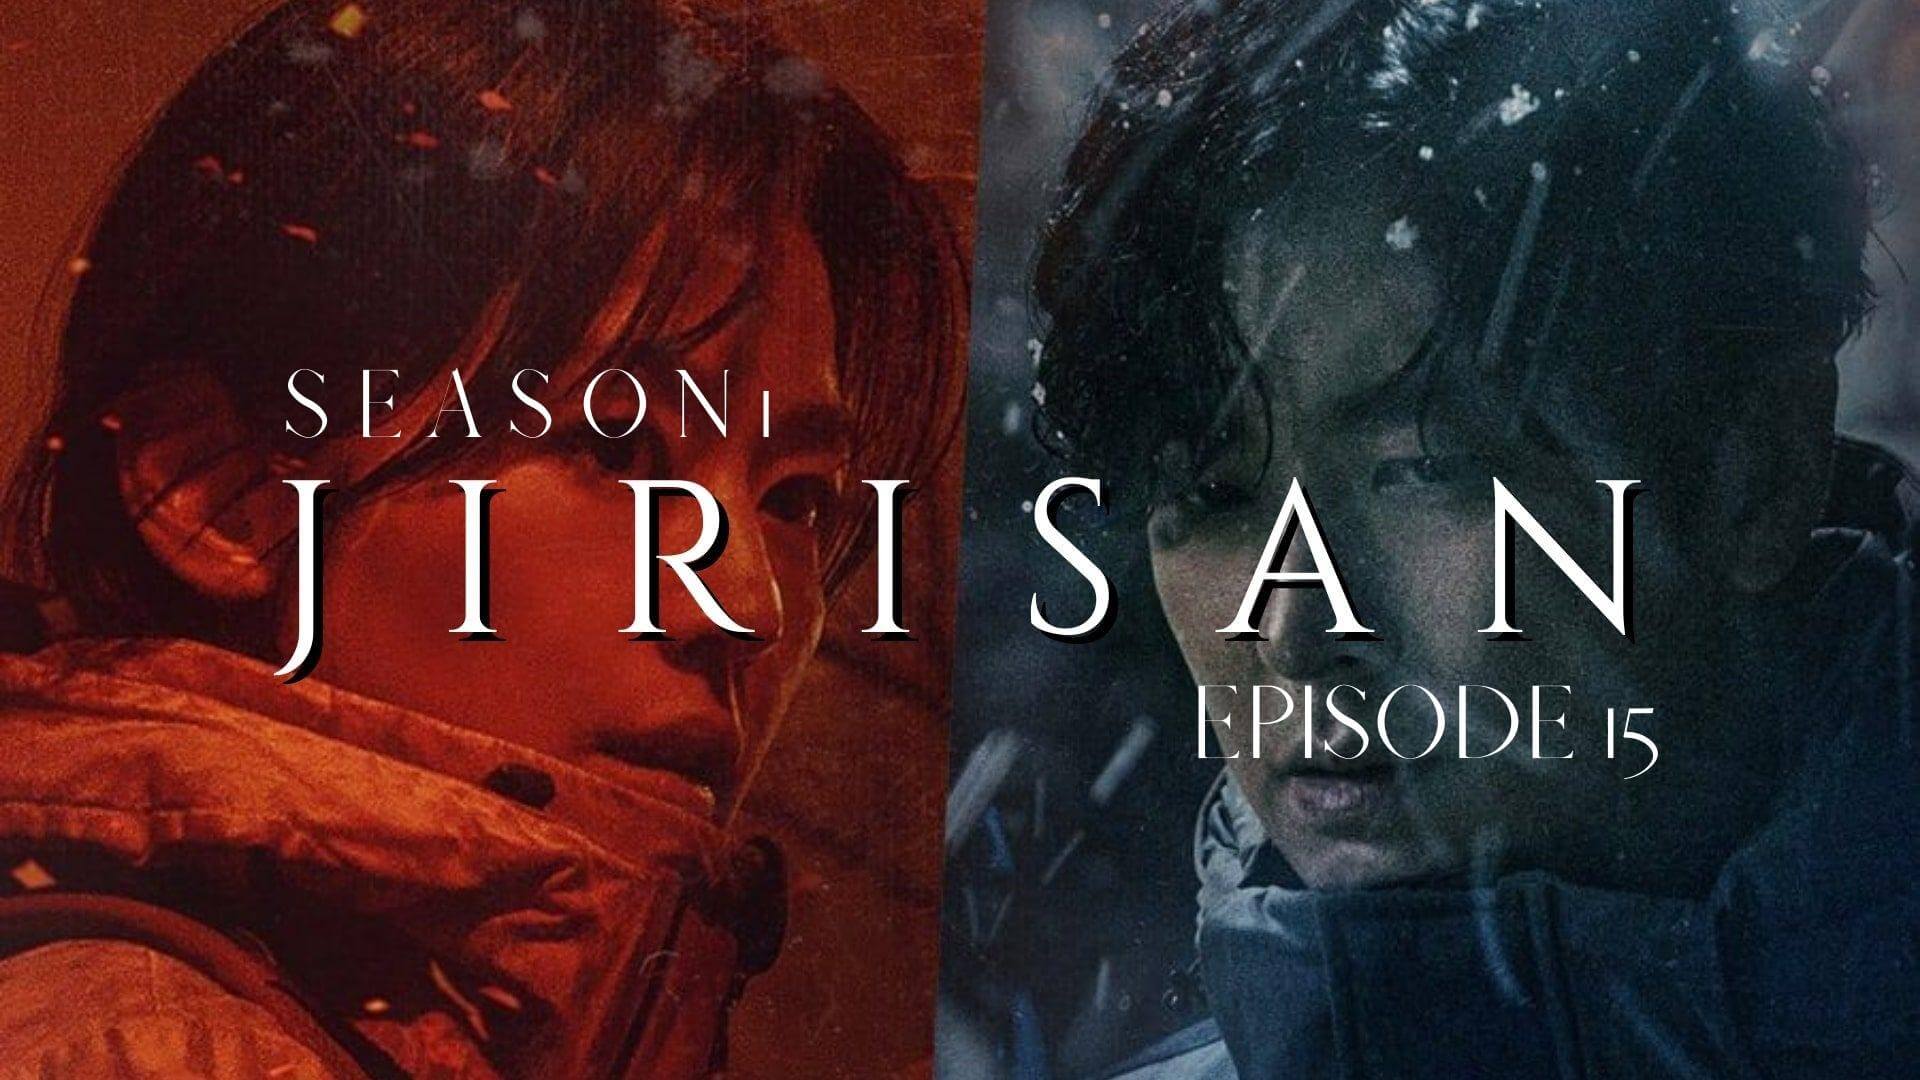 Jirisan season 1 episode 15